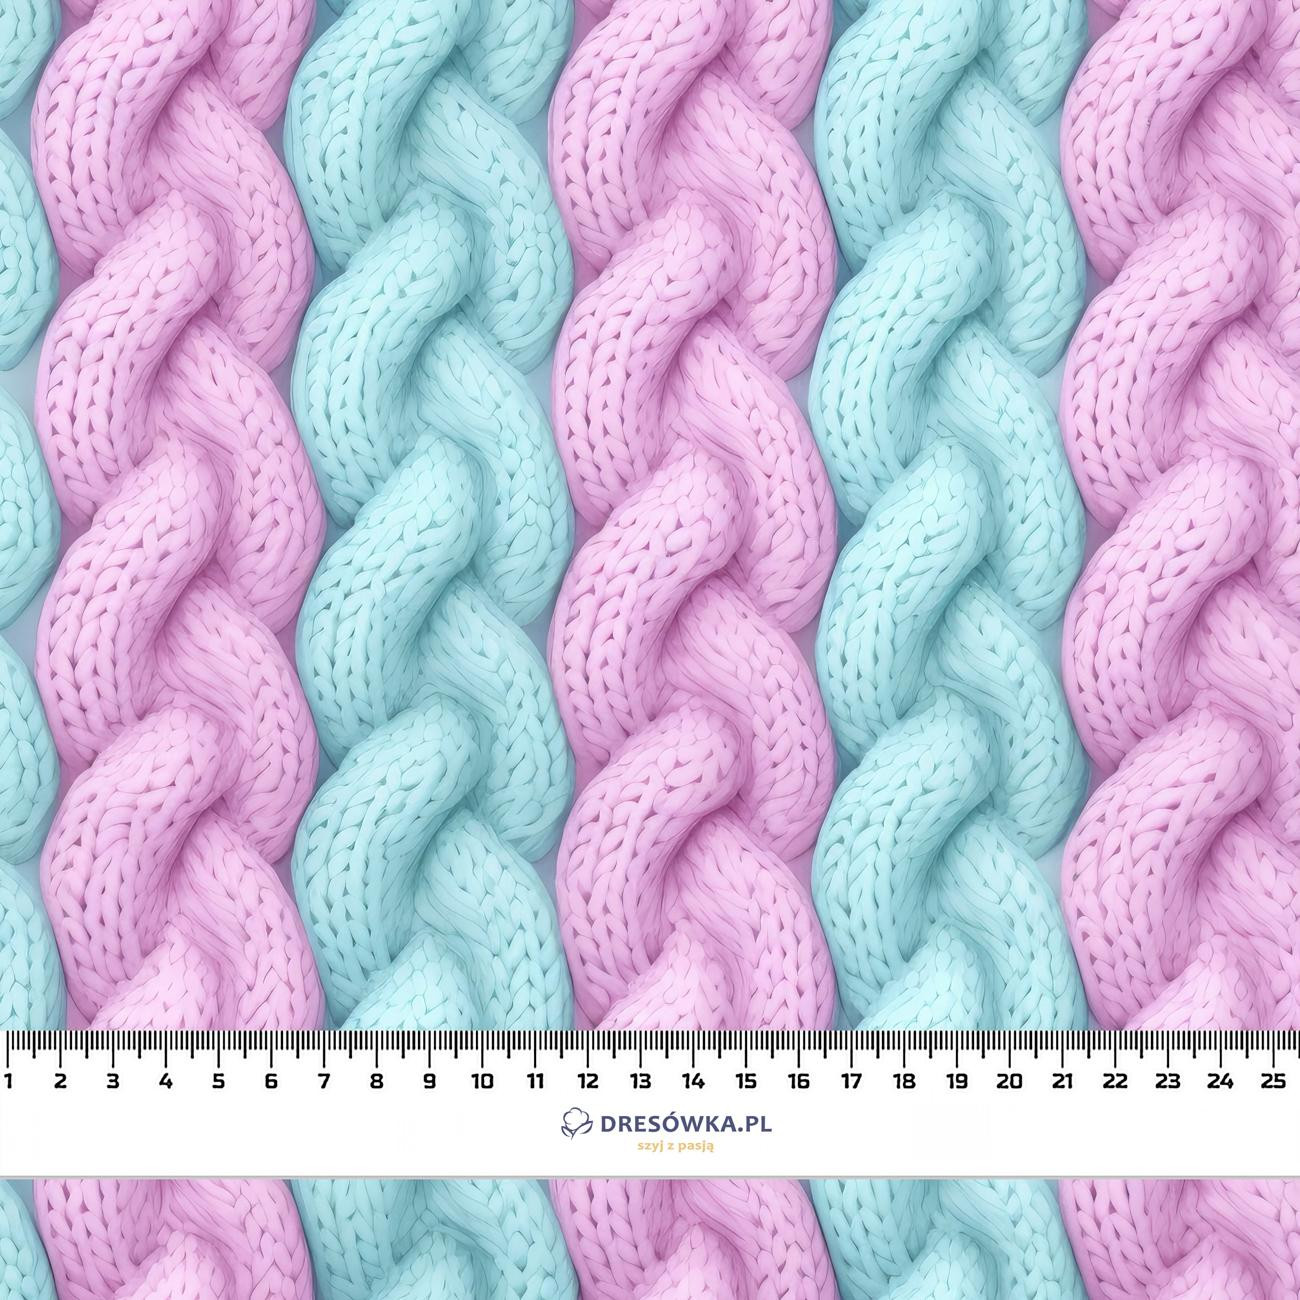 IMITATION PASTEL SWEATER PAT. 4 - looped knit fabric